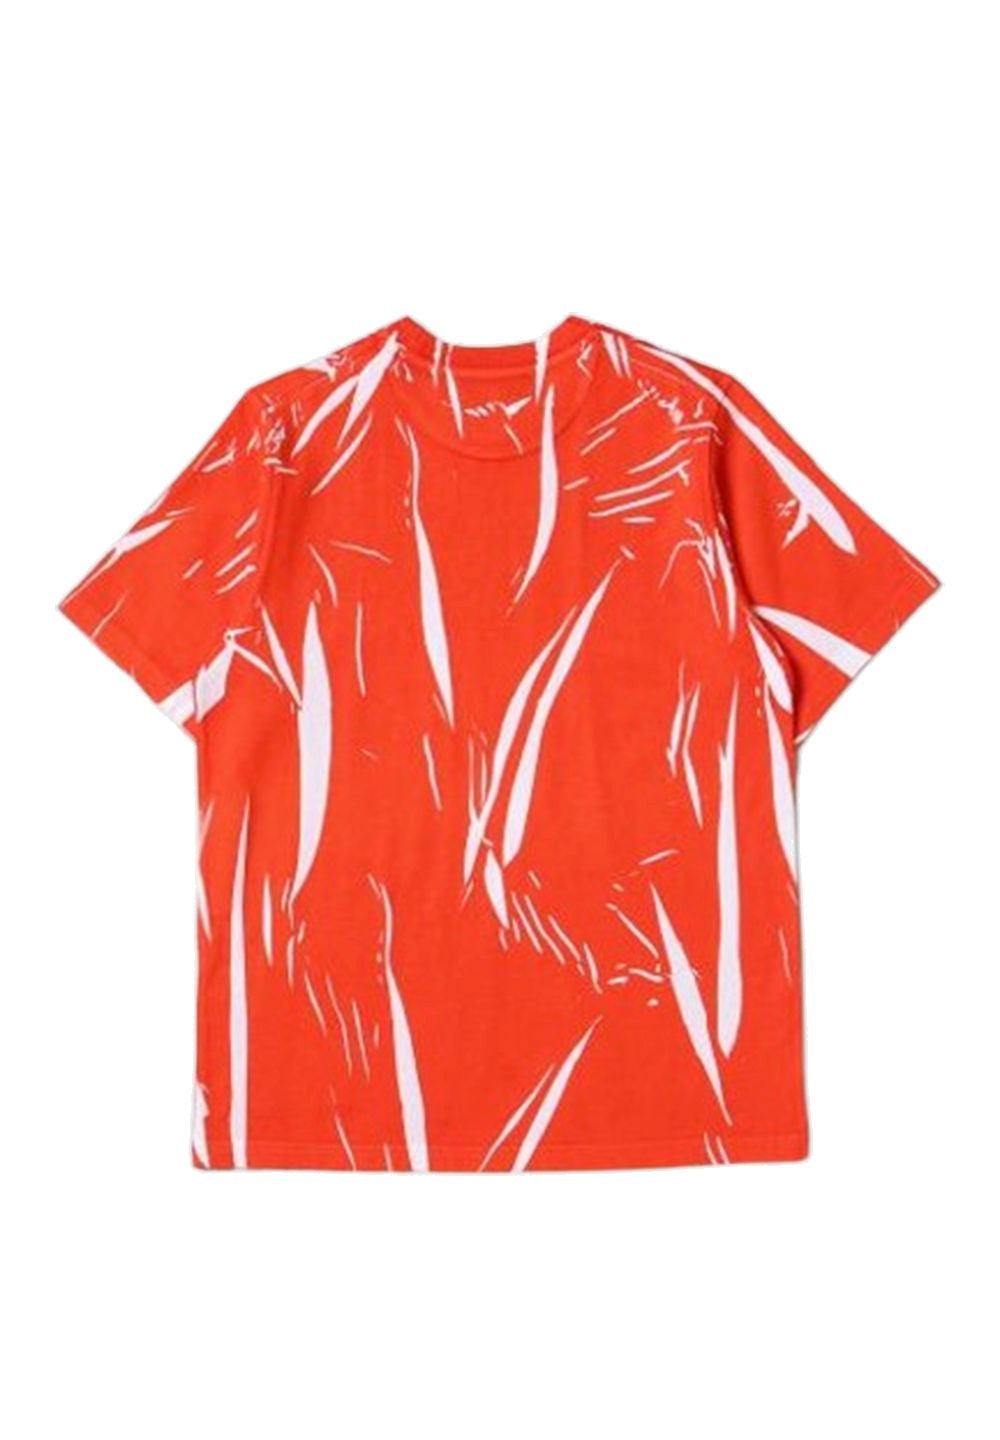 T-shirt arancione per bambino